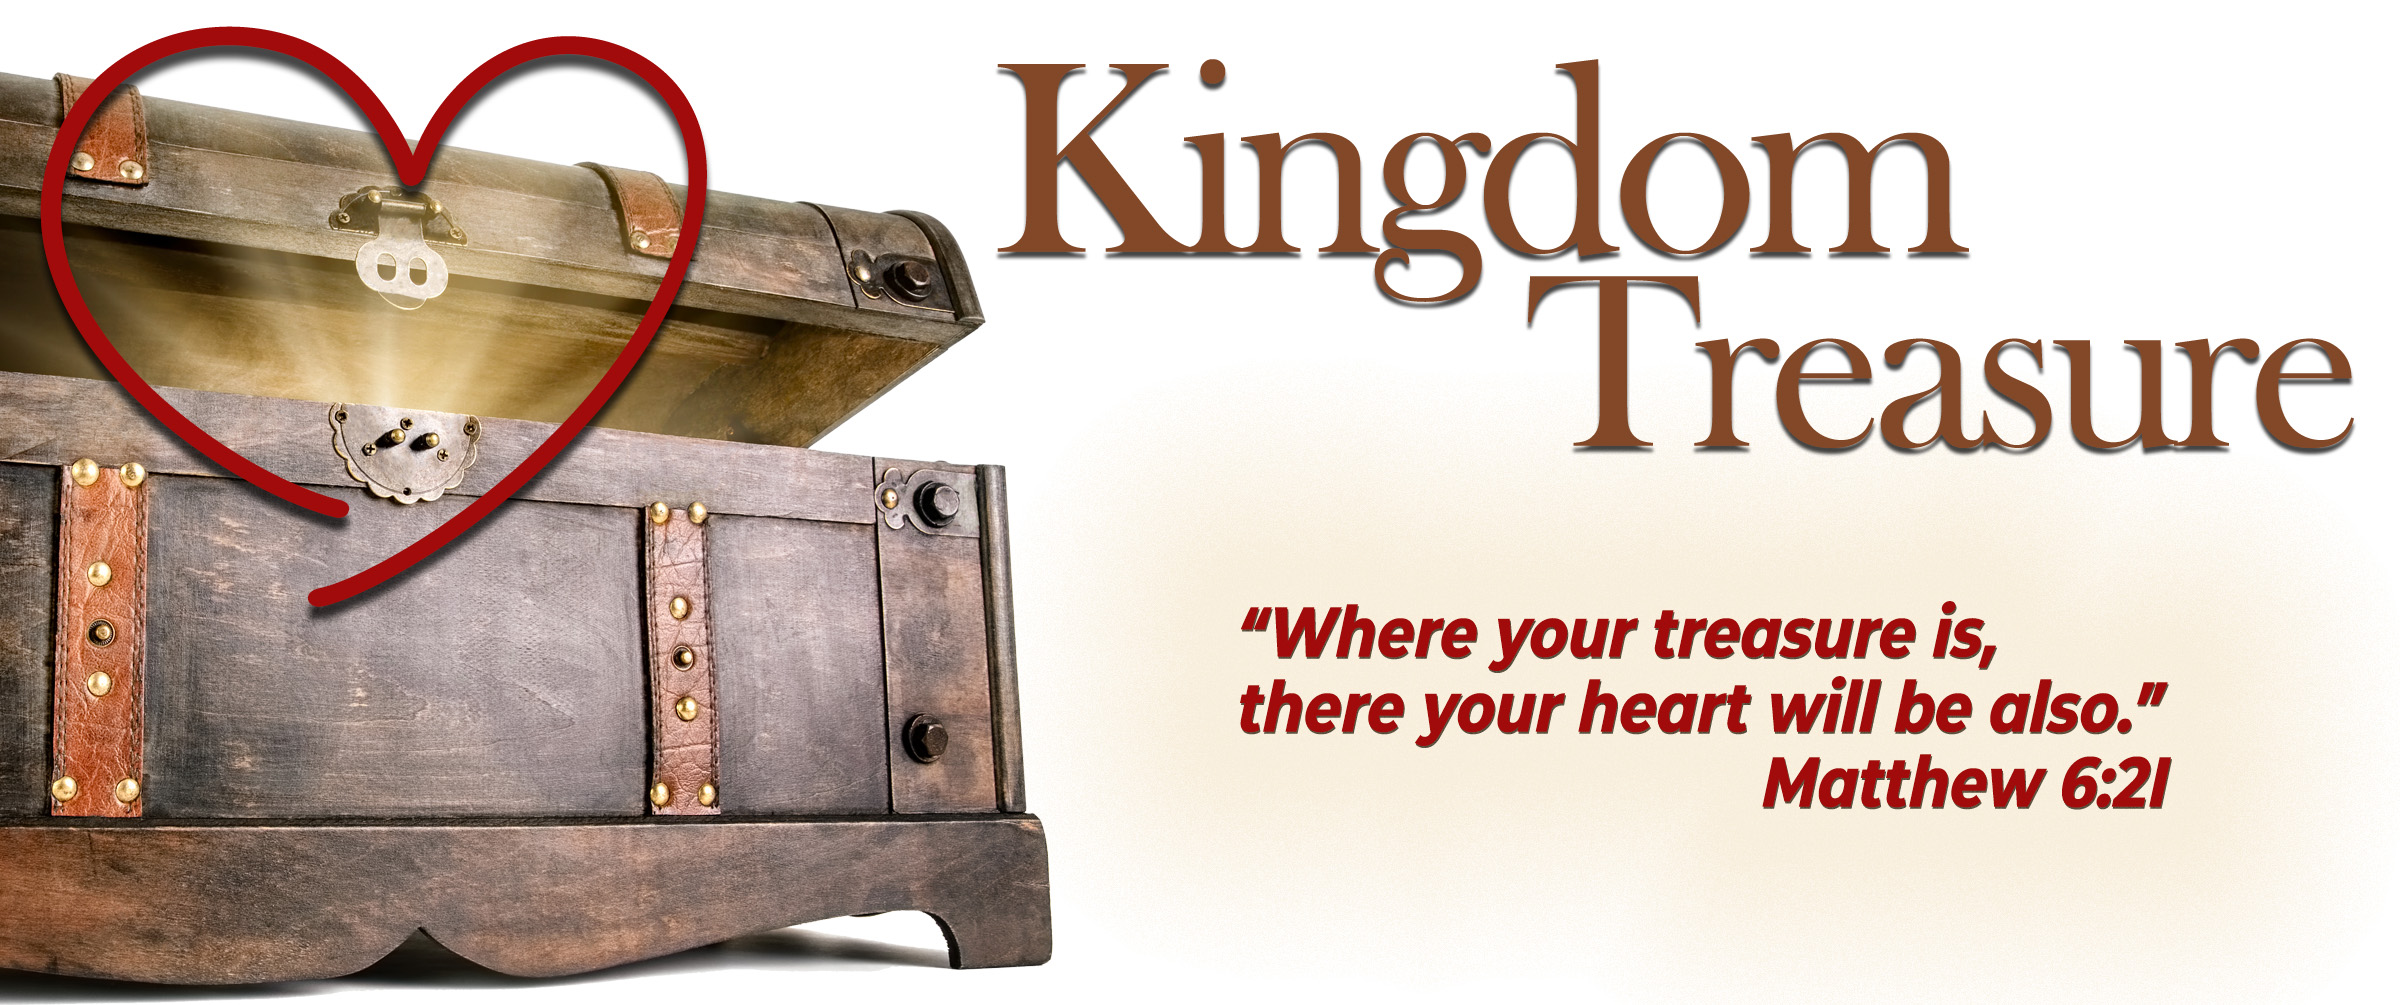 Kingdom website main page